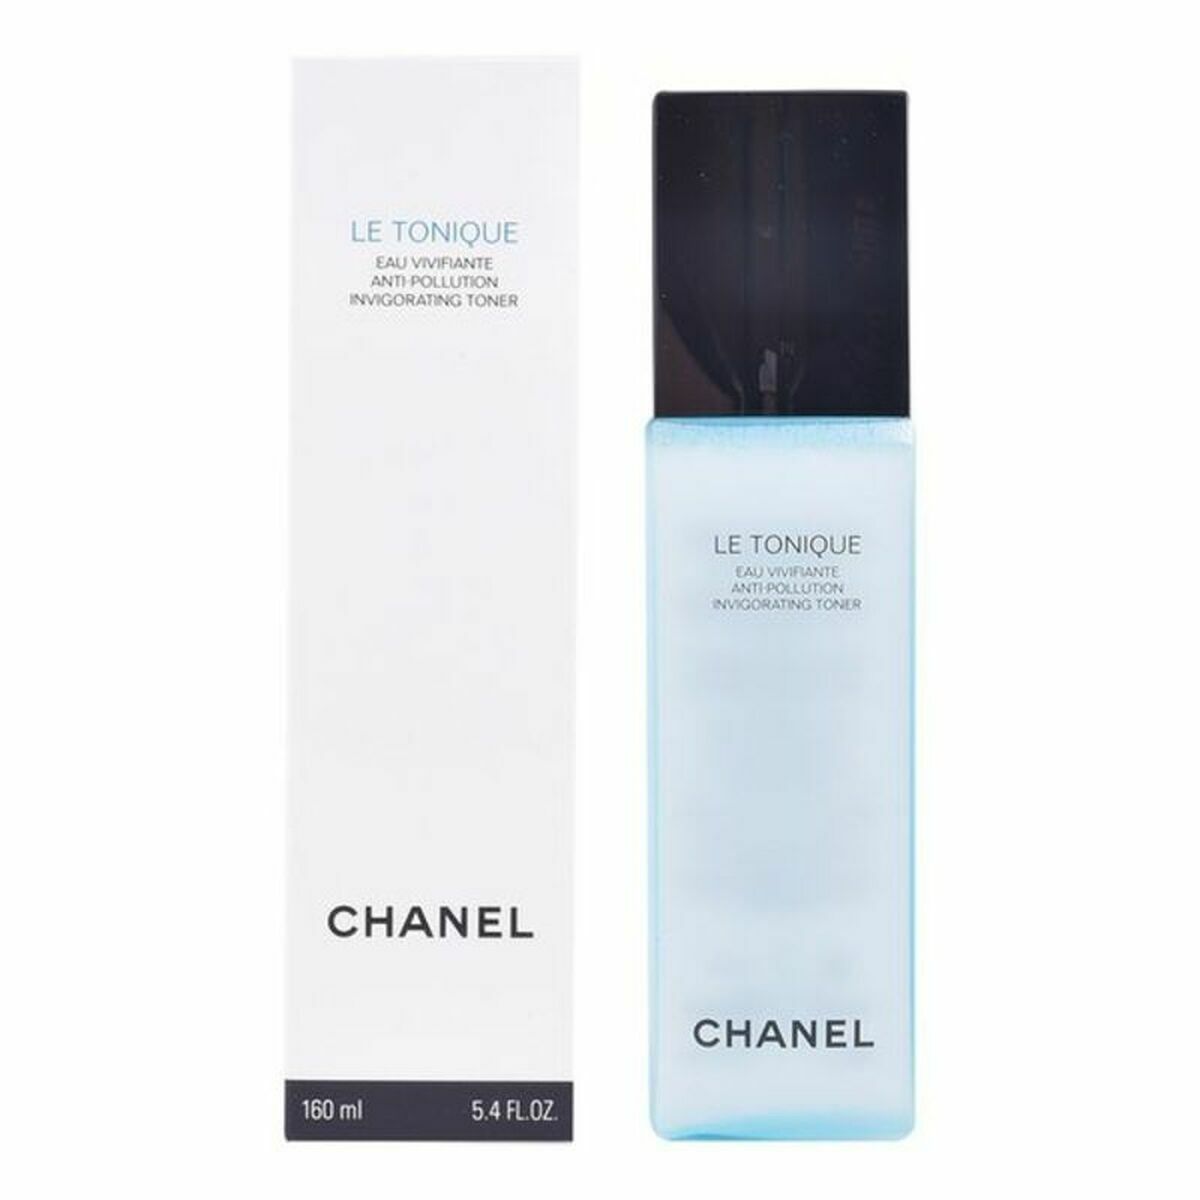 Facial Toner Anti-pollution Chanel Kosmetik (160 ml)